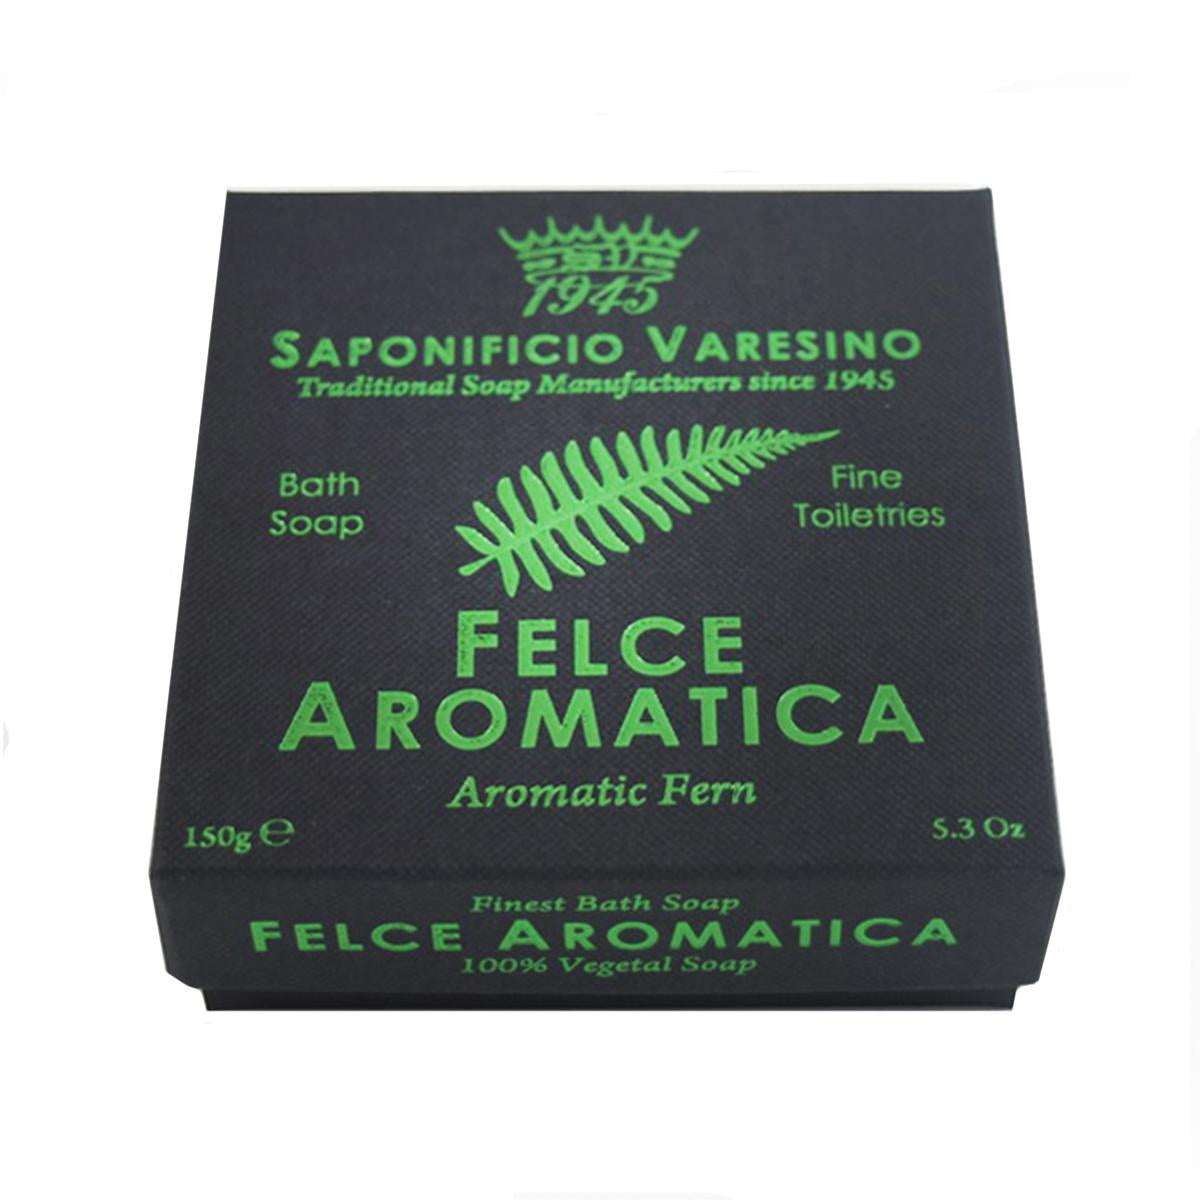 Primary image of Felce Aromatica (Aromatic Fern) Bath Soap